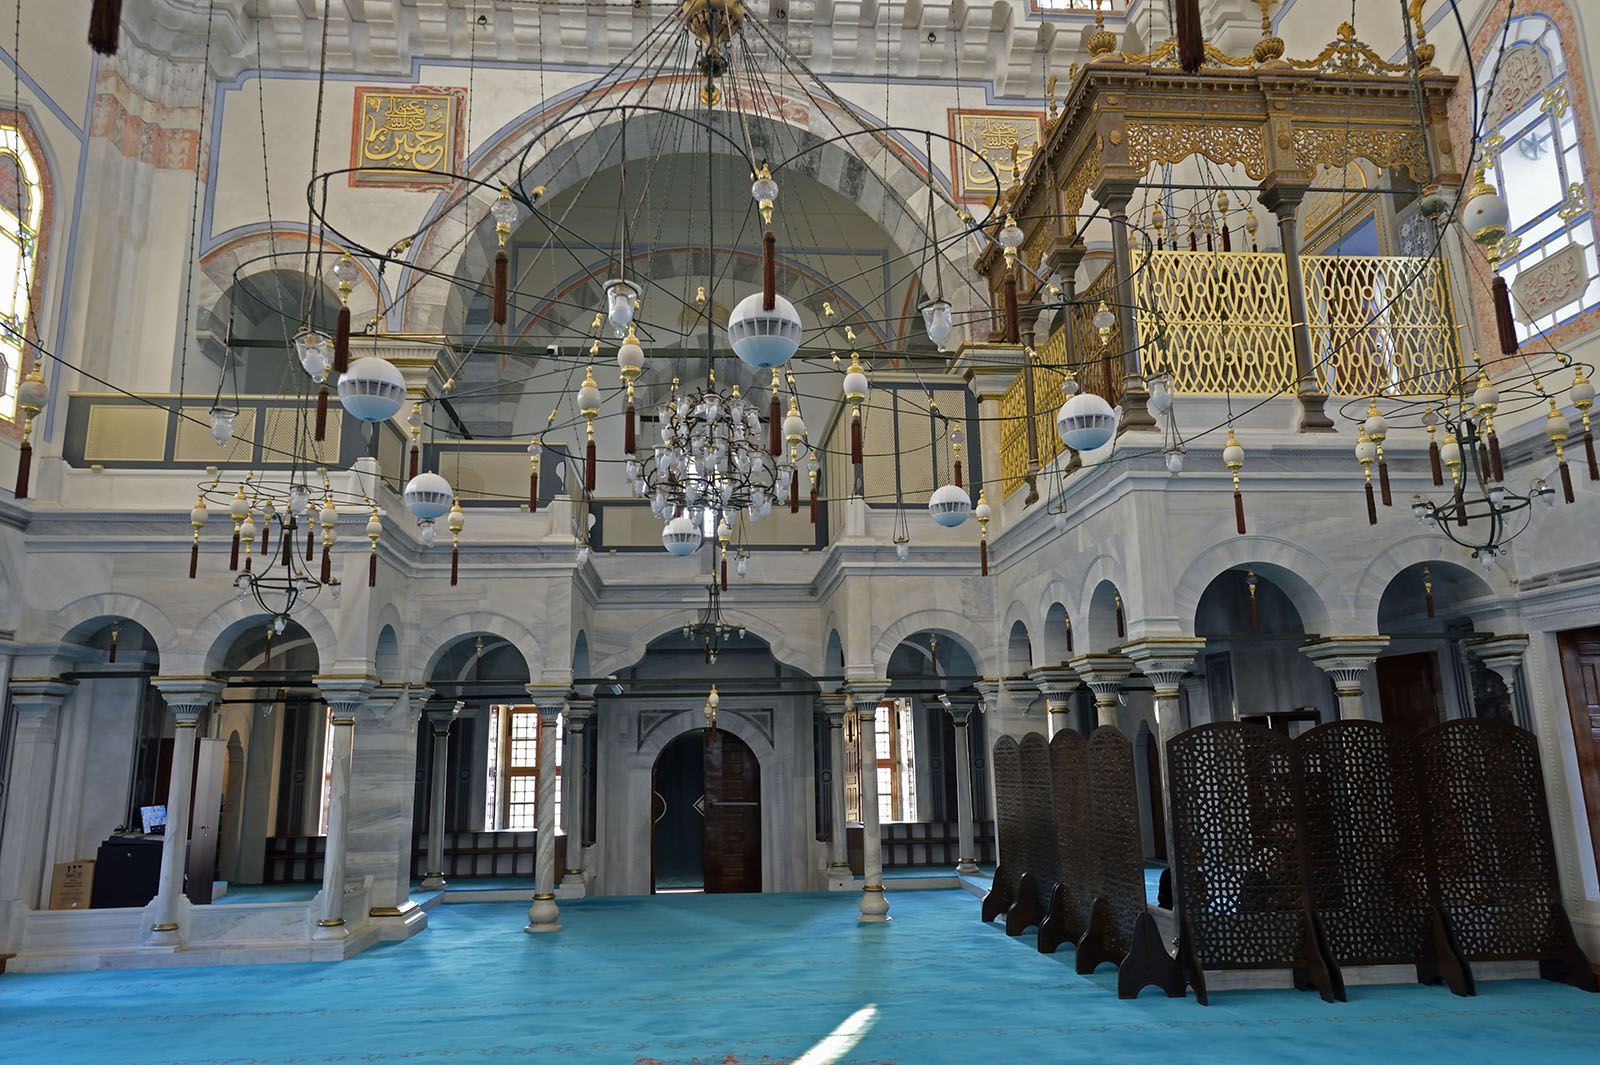 Istanbul Ayazma Mosque entrance side 0654.jpg